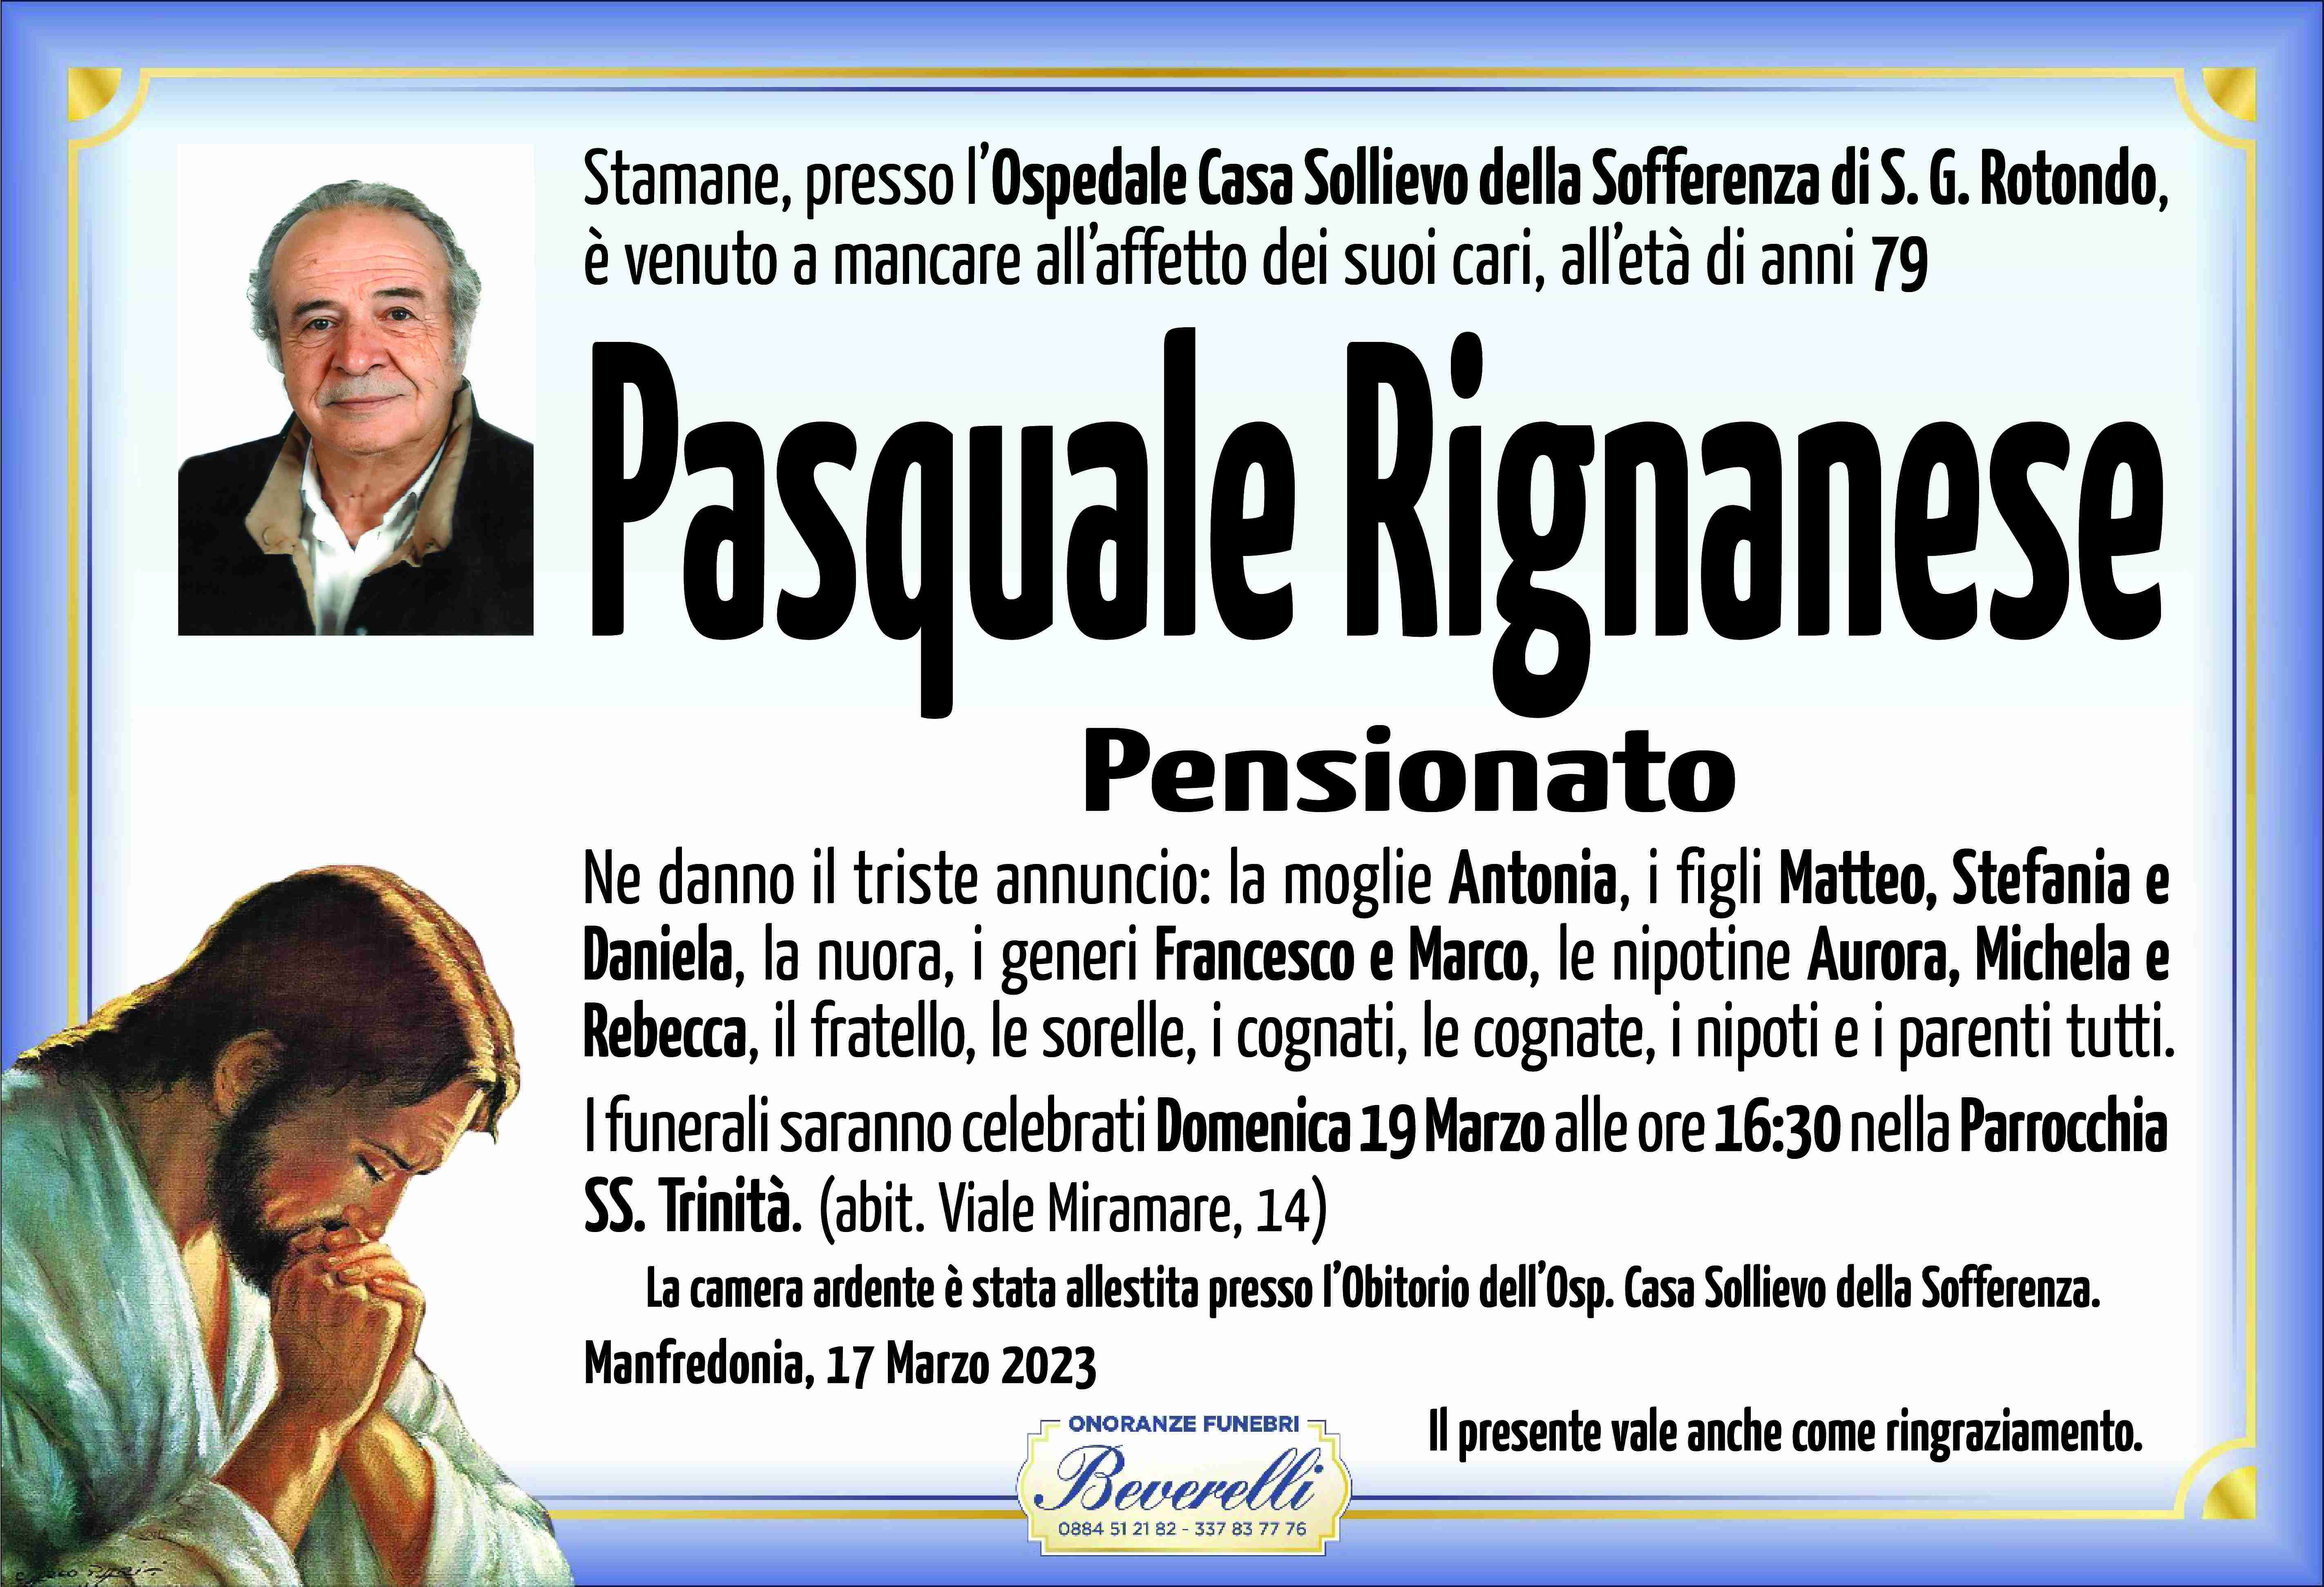 Pasquale Rignanese